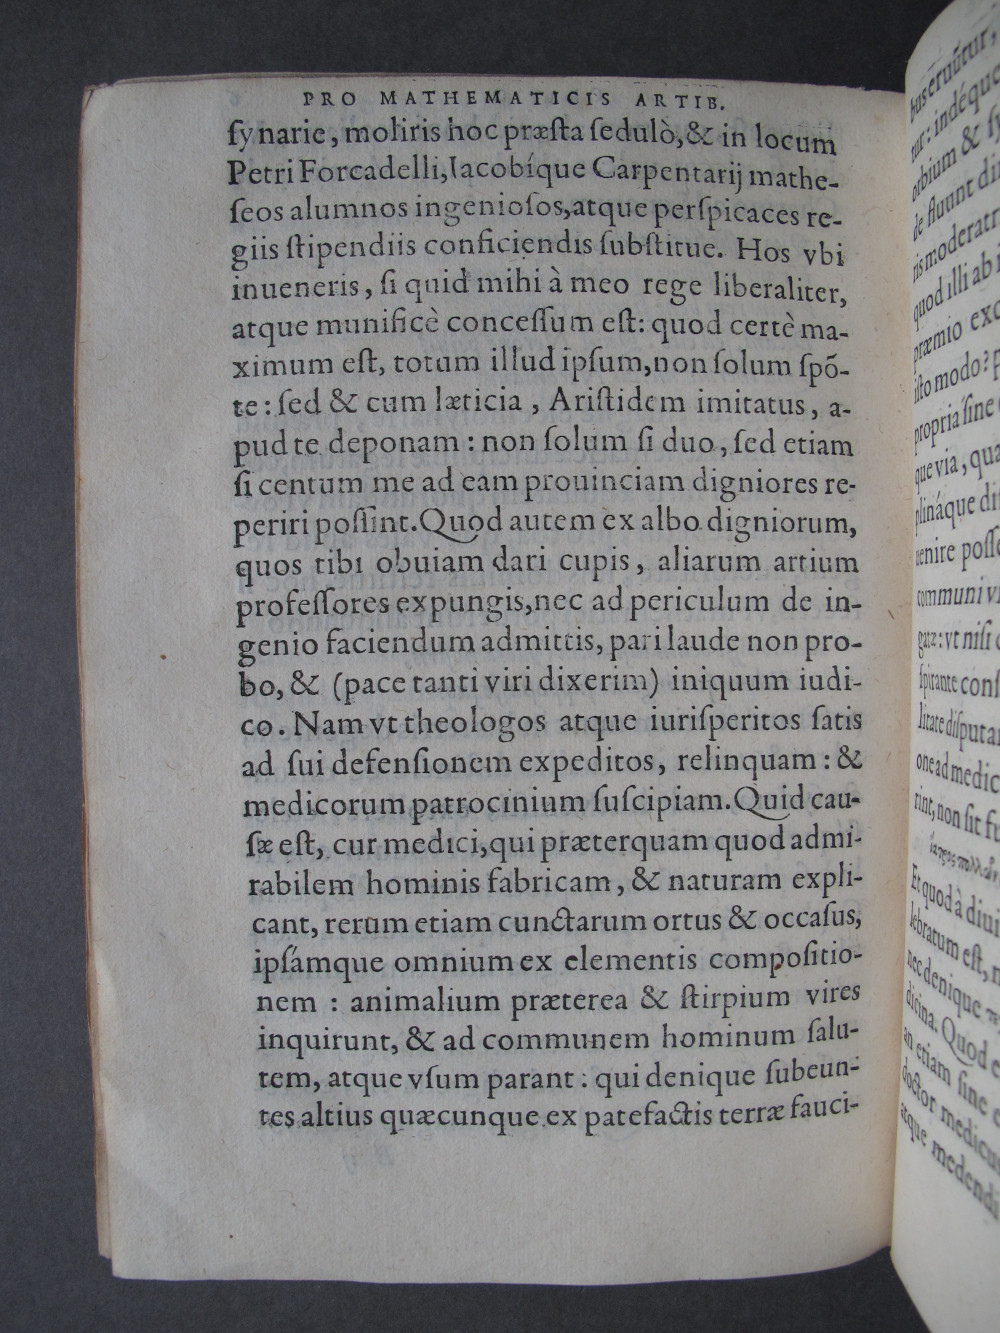 Folio 6 verso